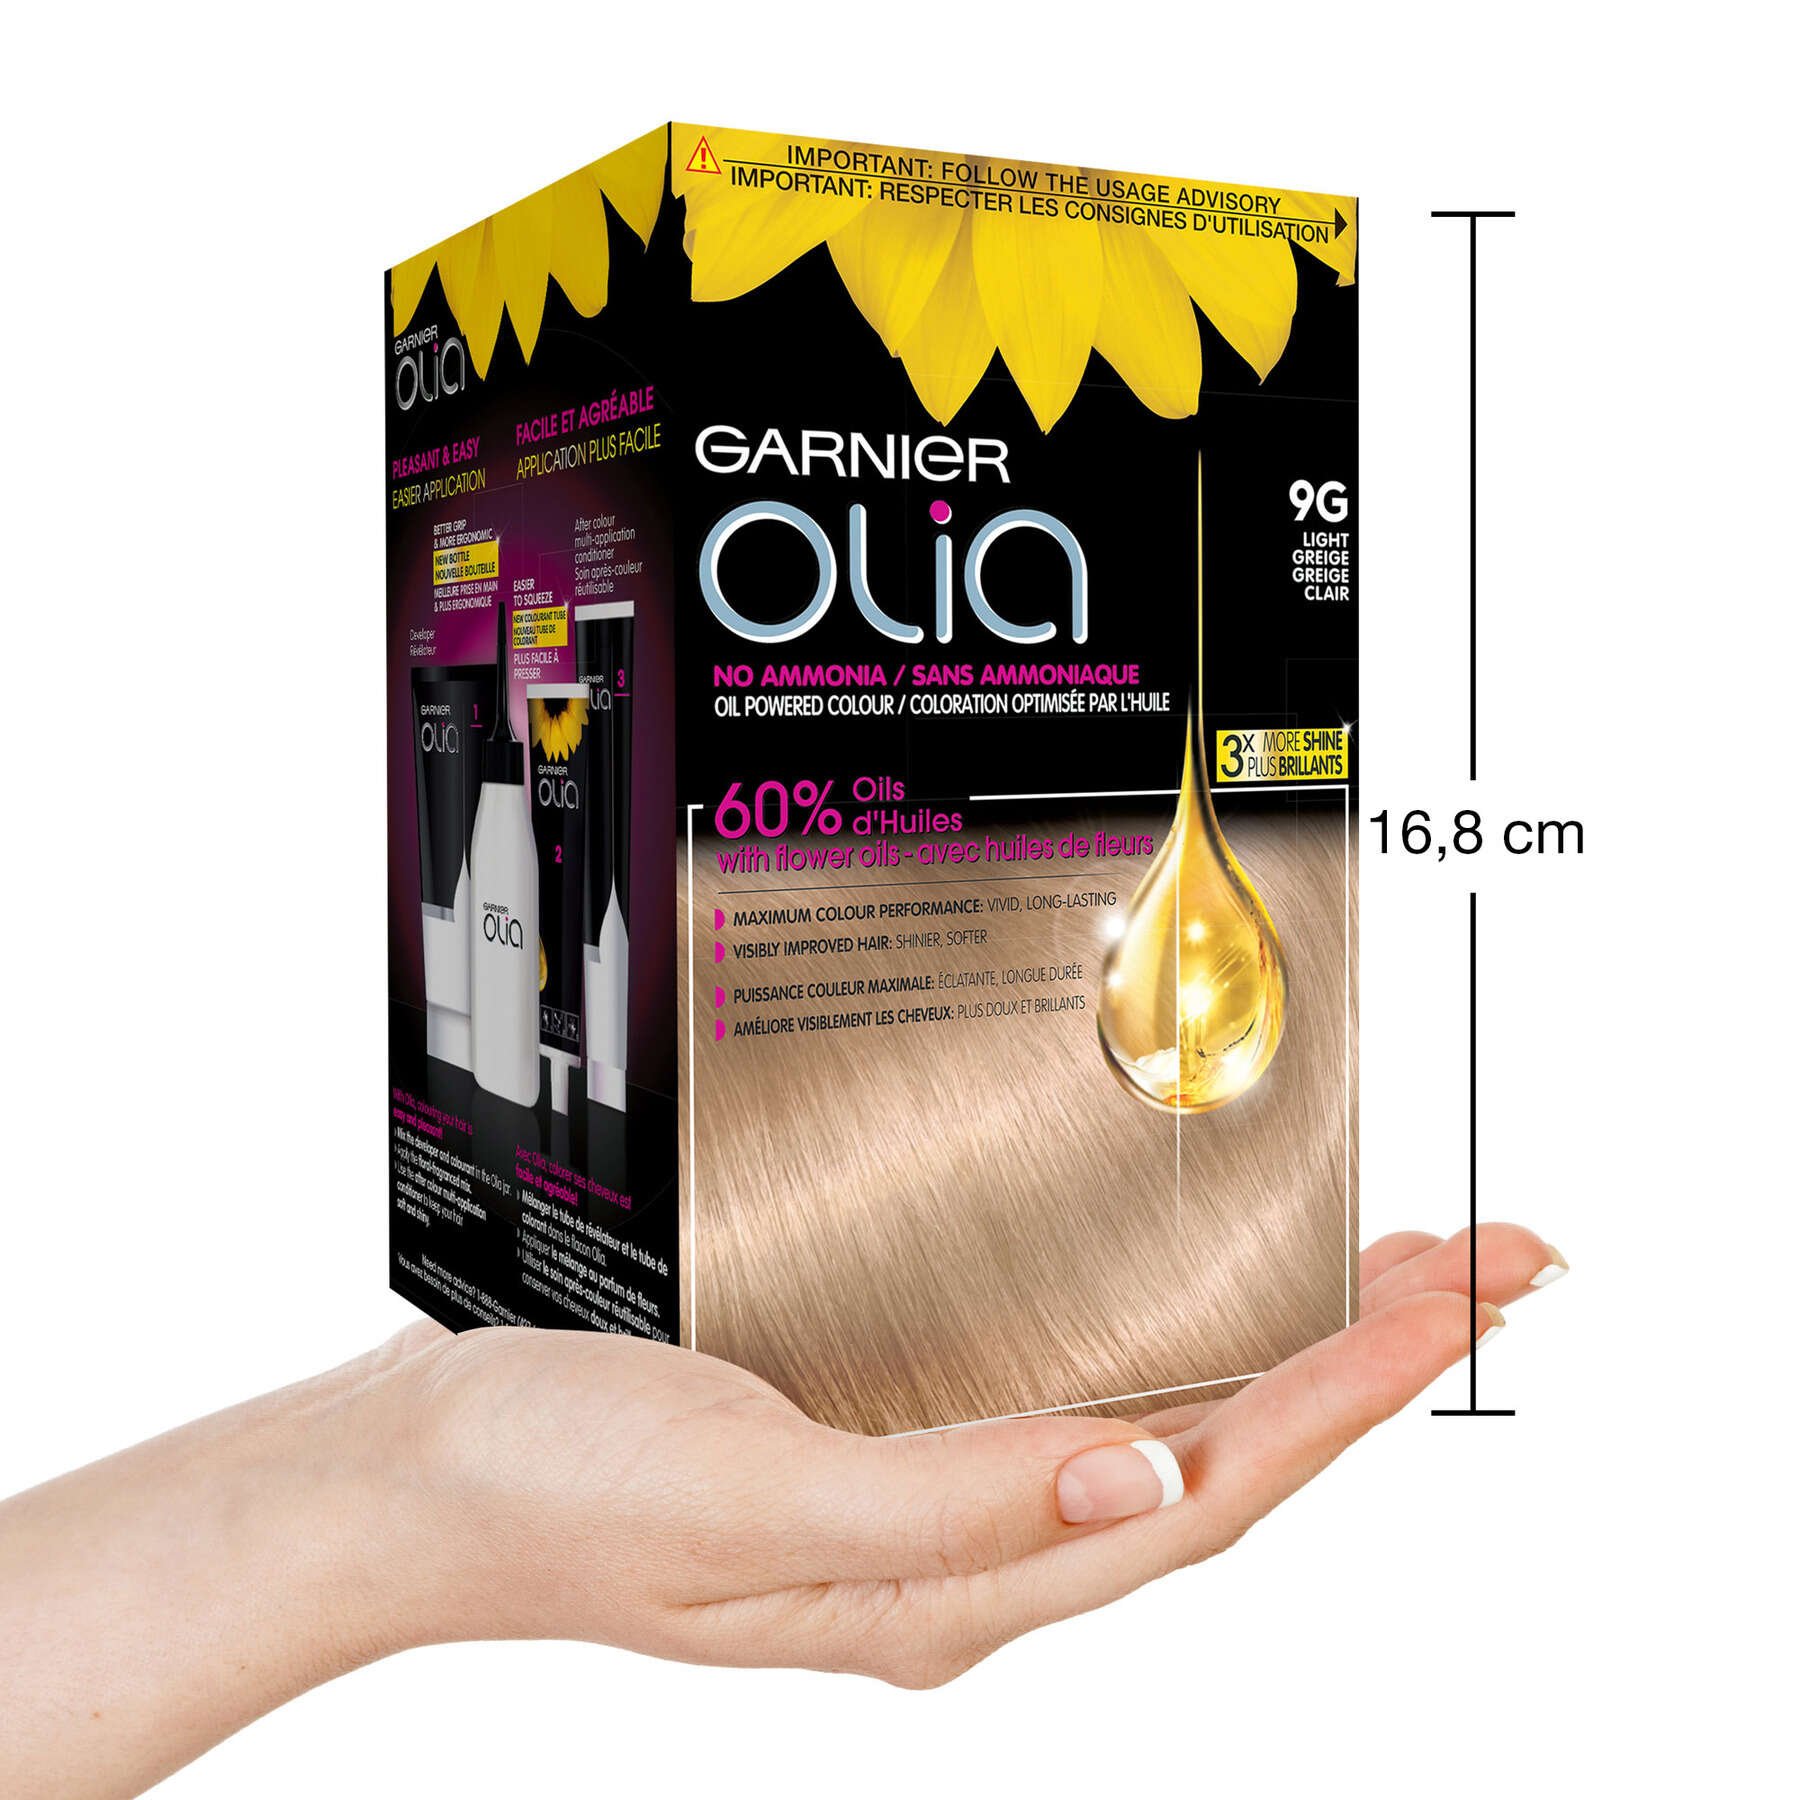 garnier hair dye olia 9g light greige 3600542031134 inhand